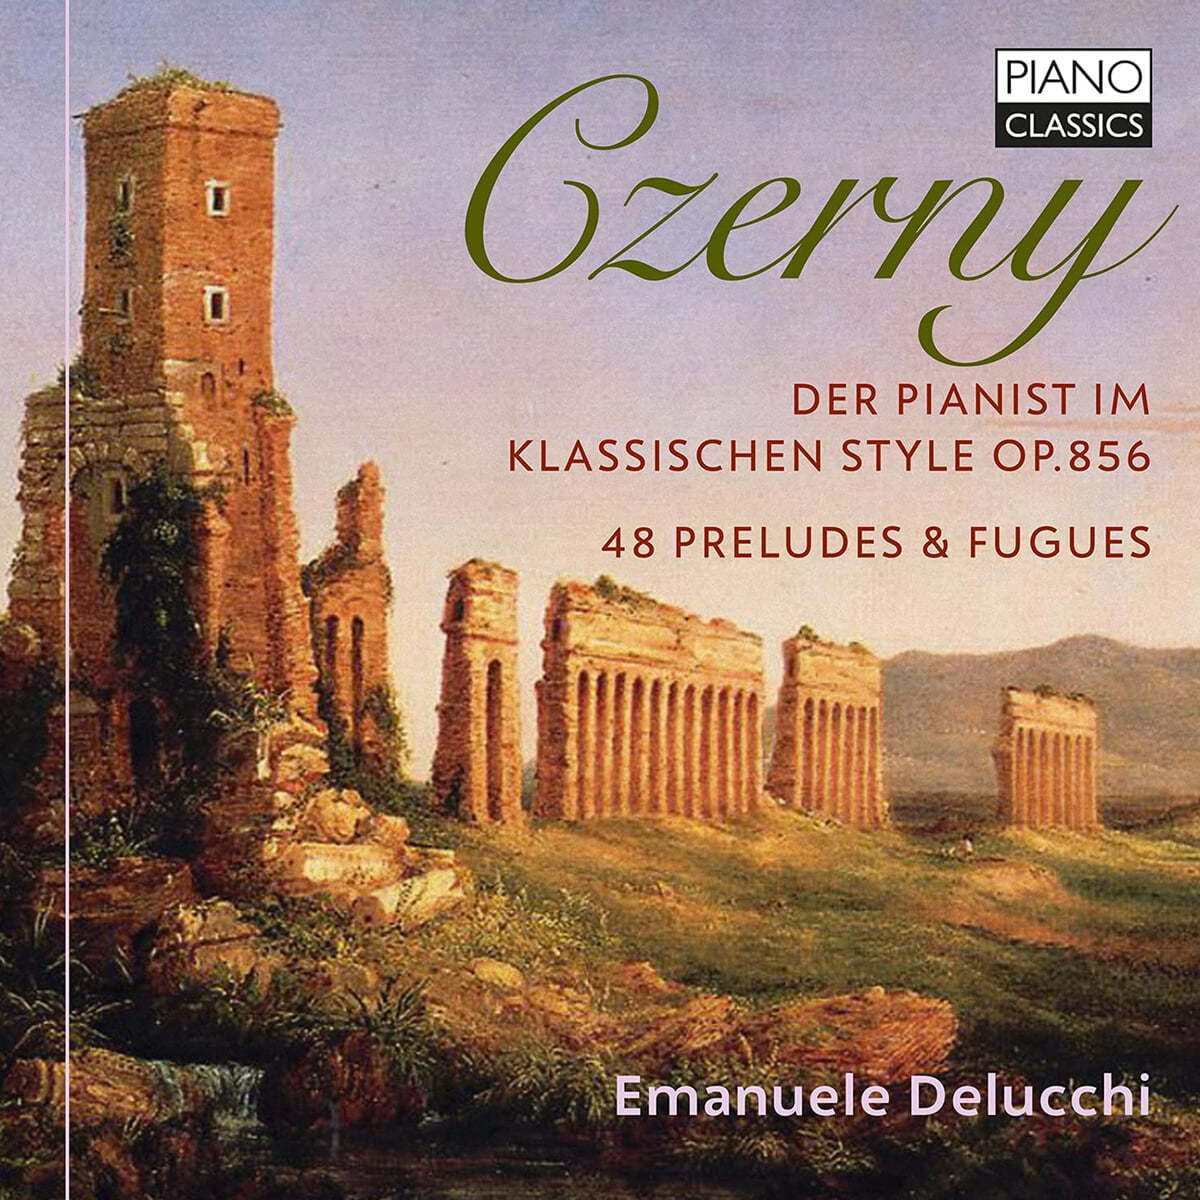 Emanuele Delucchi 체르니: 고전 양식의 피아니스트 - 프렐류드와 푸가 (Czerny: Der Pianist im Klassischen Style Op.856 - 48 Preludes &amp; Fugues) 